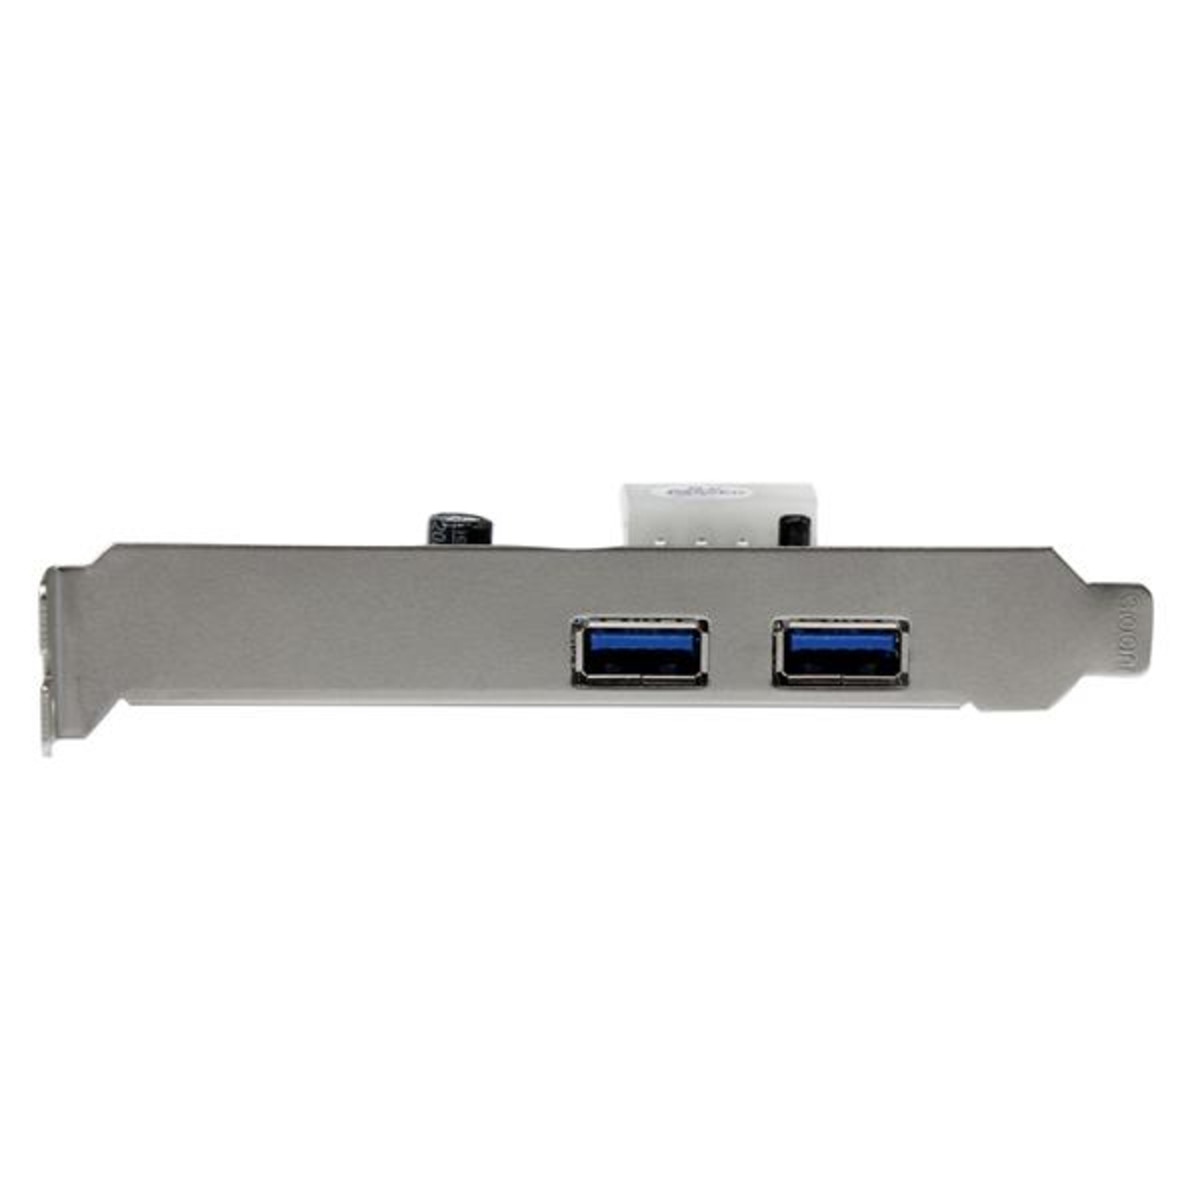 2 Port PCIe SuperSpeed USB3.0 Card Adpt